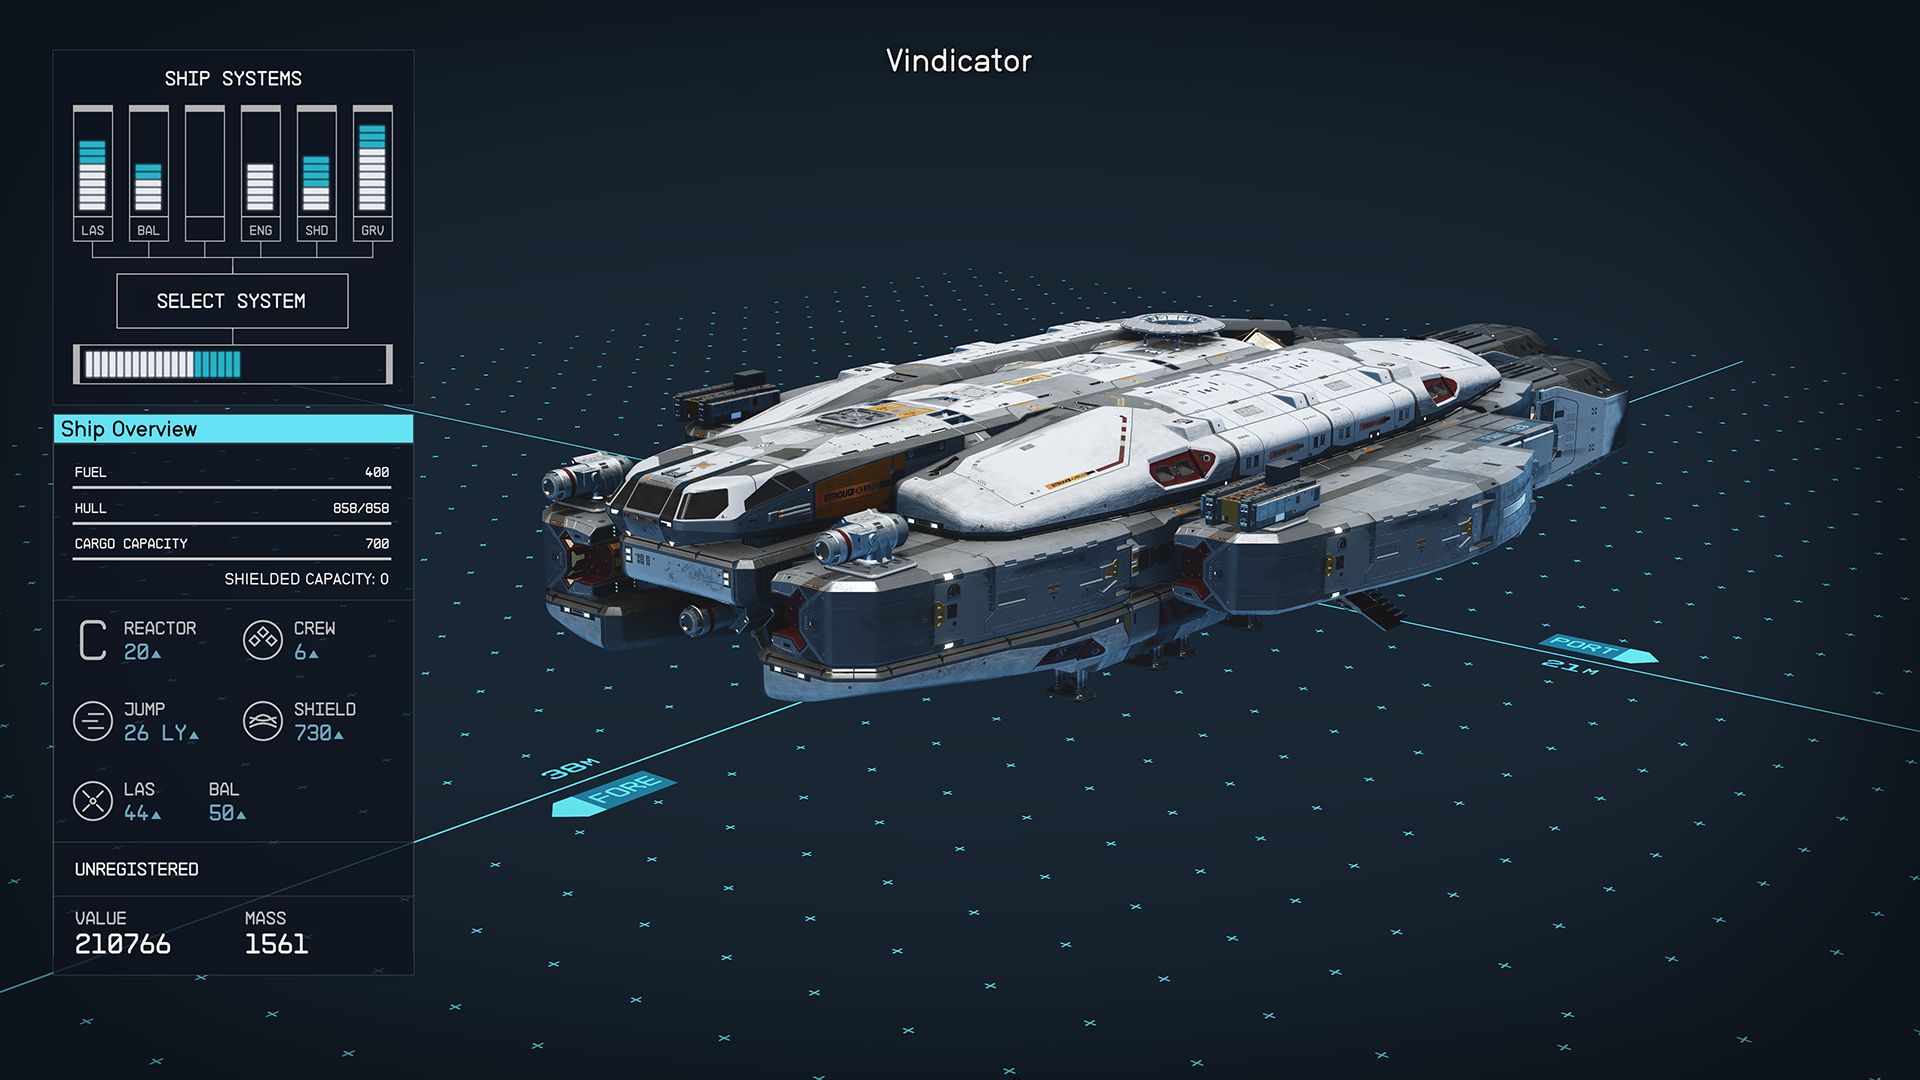 Vindicator Class C Starship by Stroud-Eklund in Starfield You can buy it at Stroud-Eklund Staryard orbiting Dalvik in Narion System - Starfield